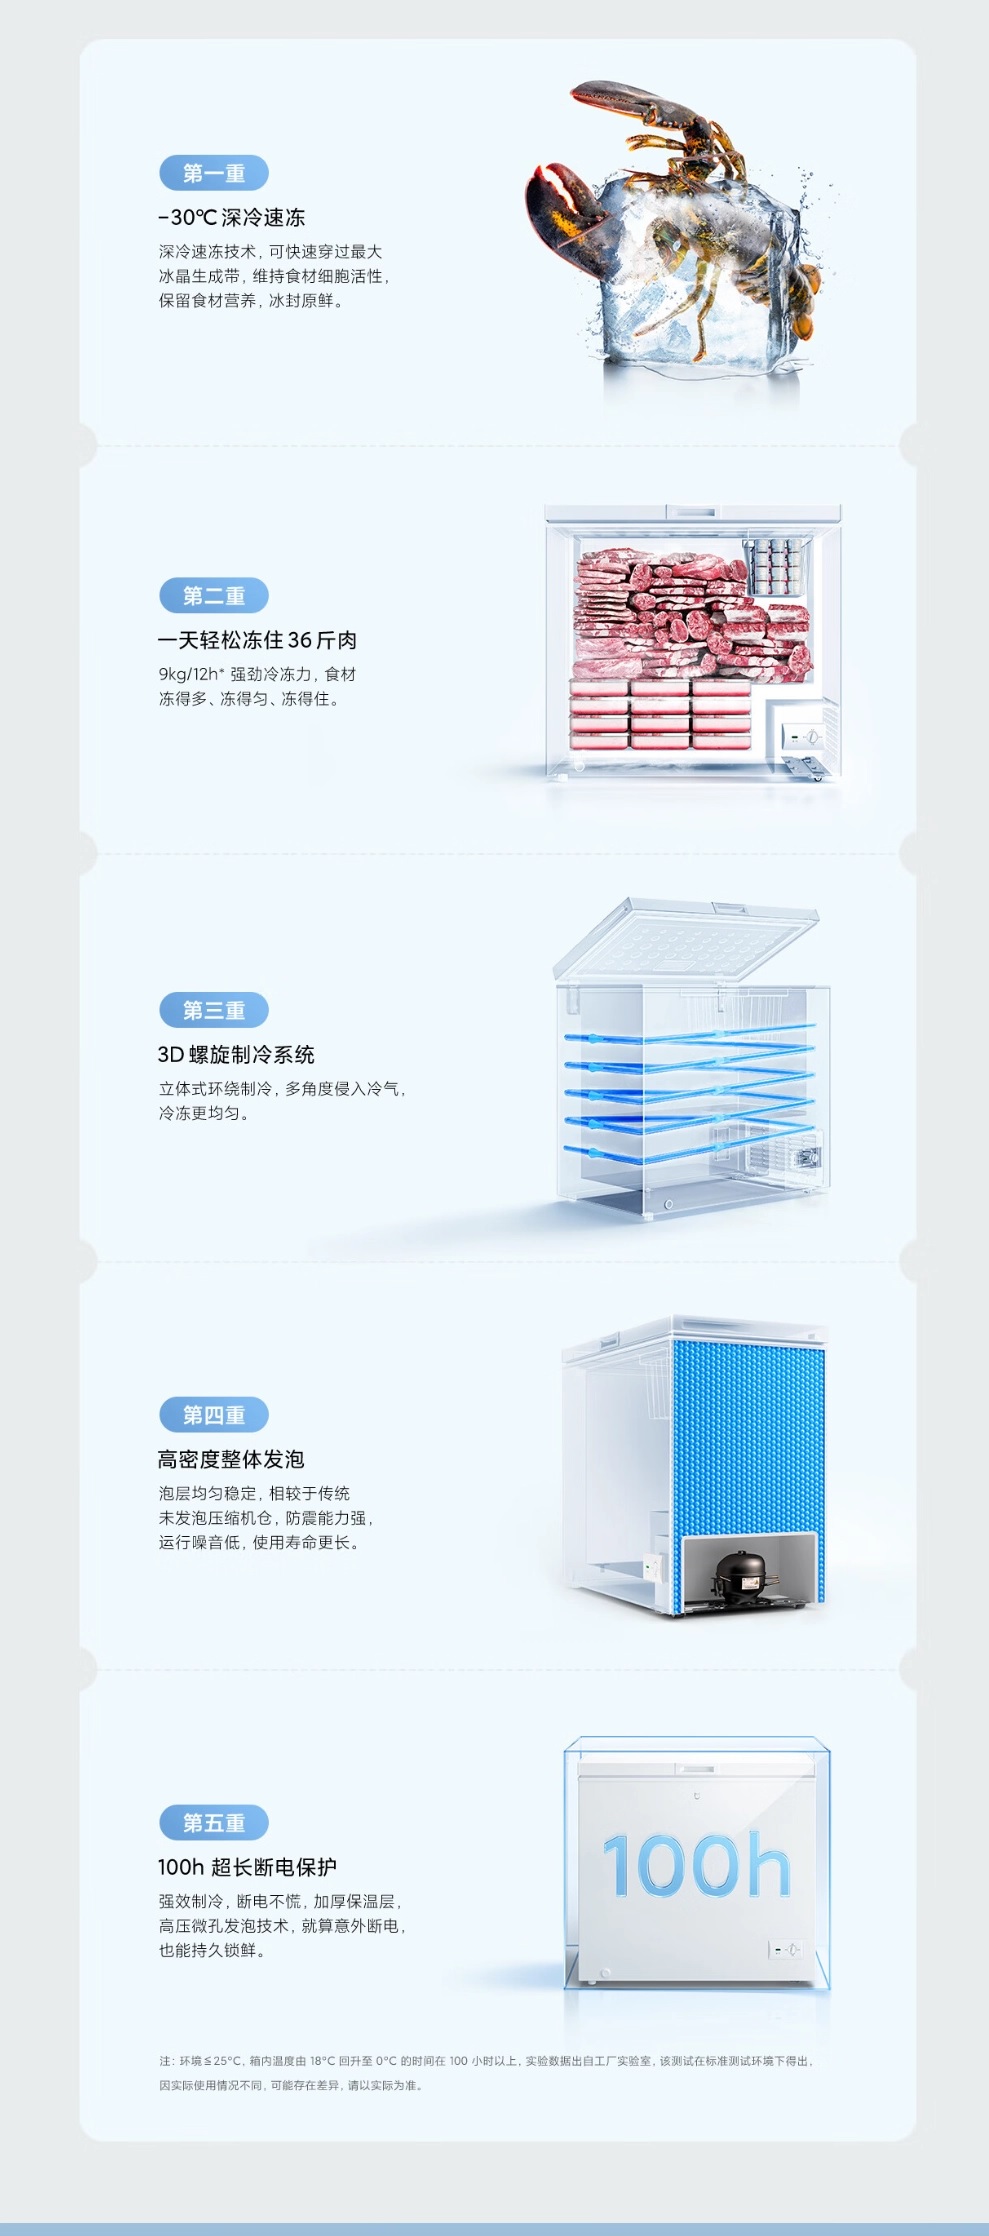 Xiaomi Mijia Freezer 203L